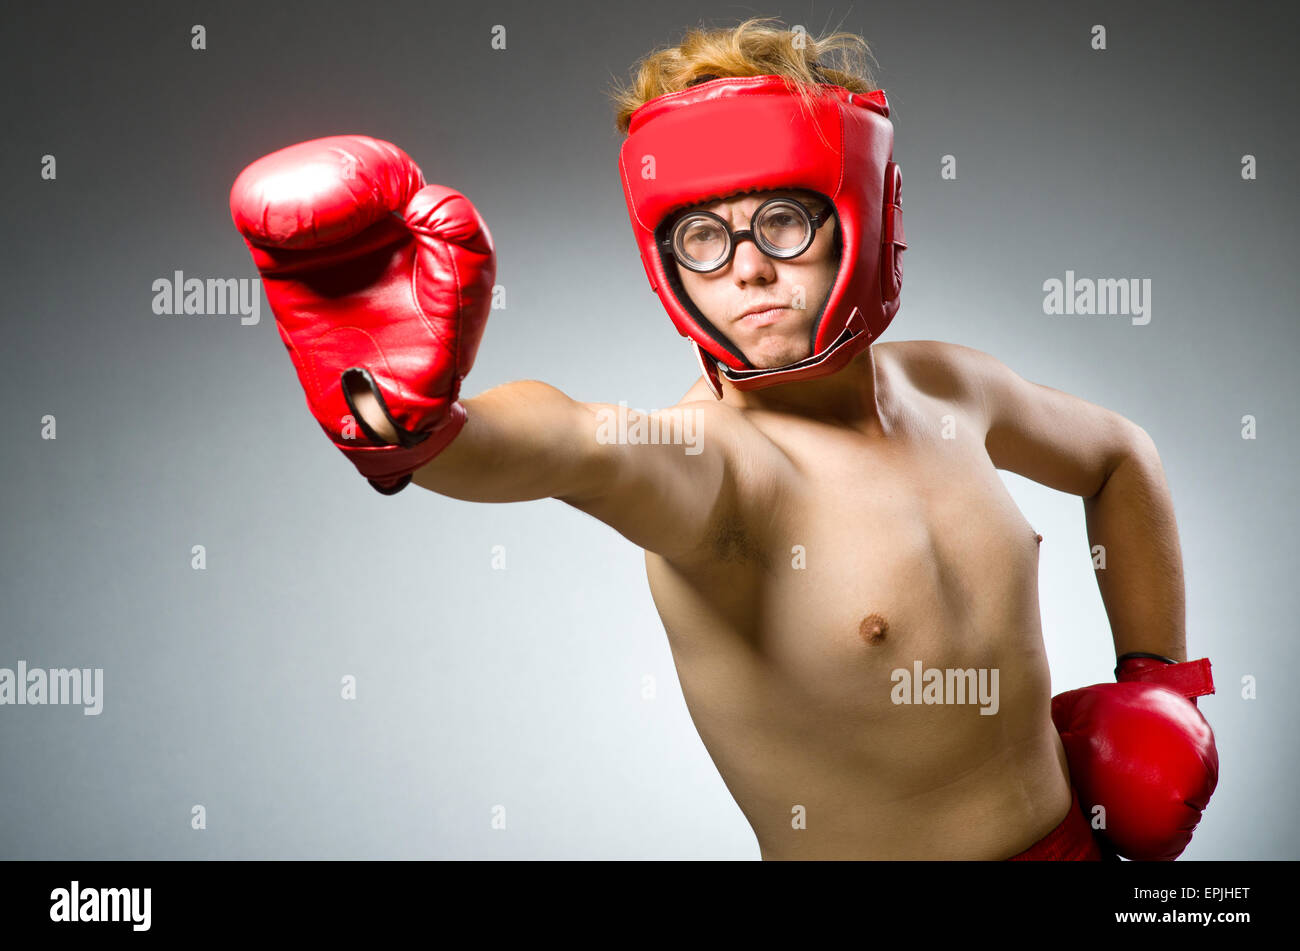 Funny nerd boxer in sport concept Stock Photo